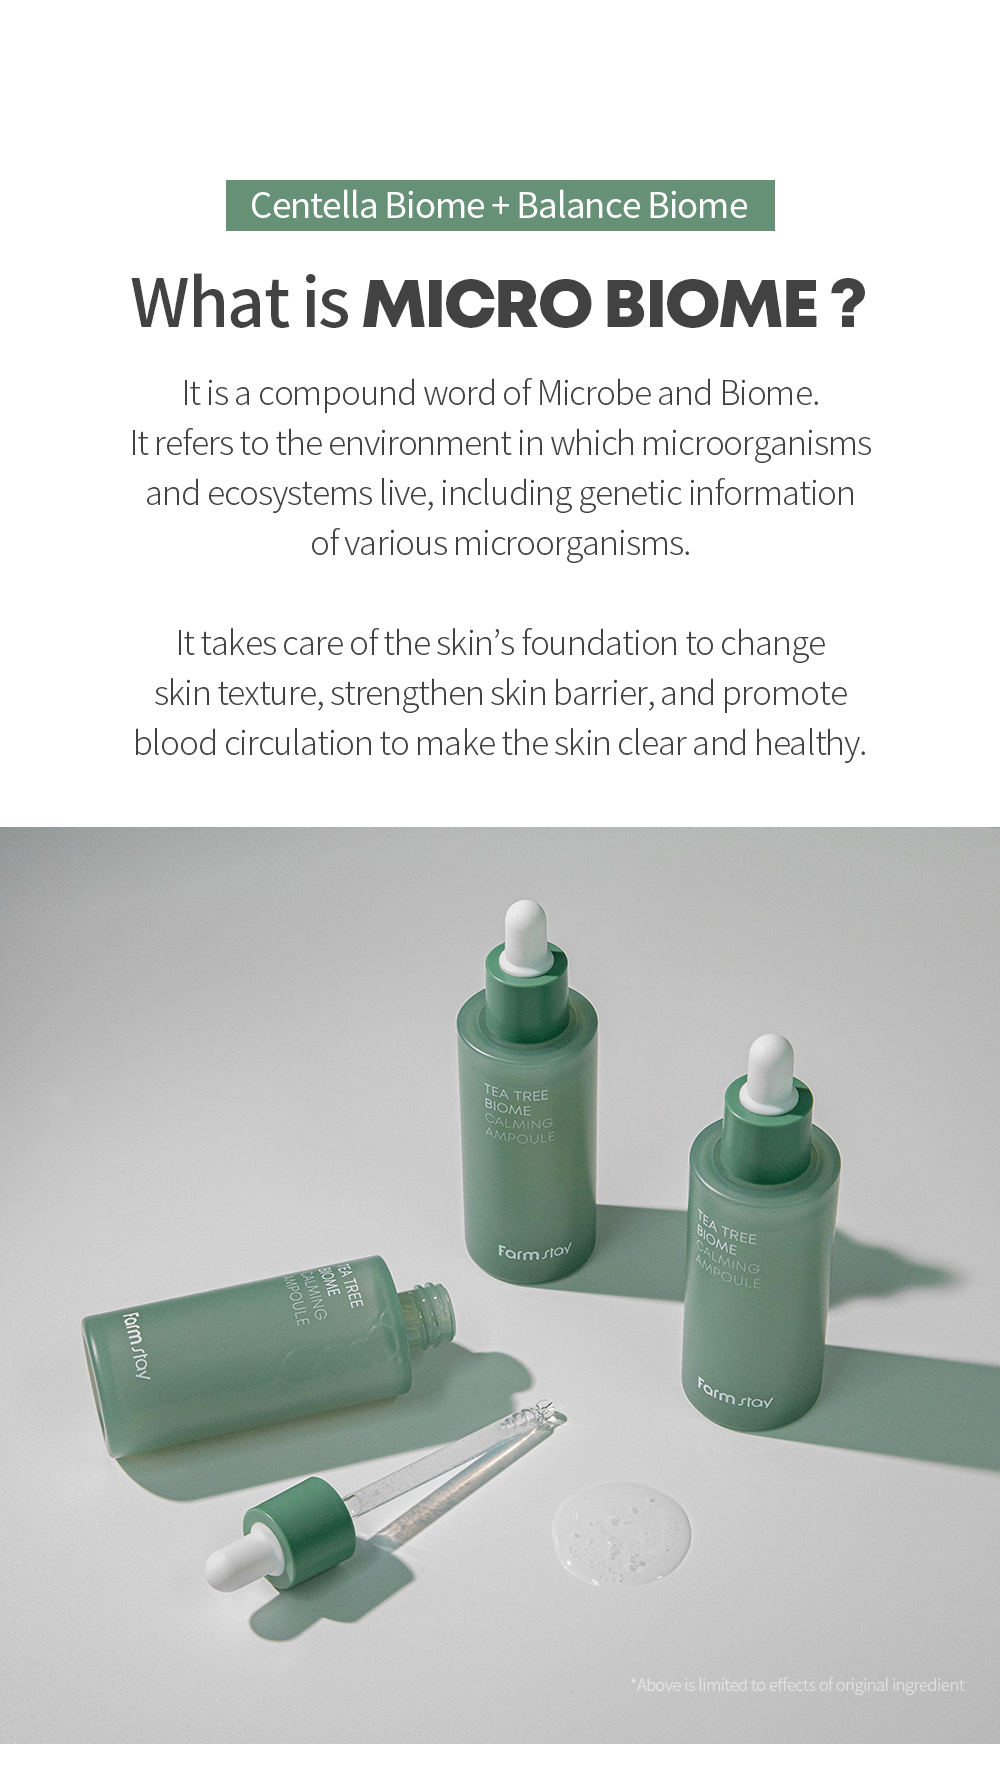 cosmetics product image-S1L5